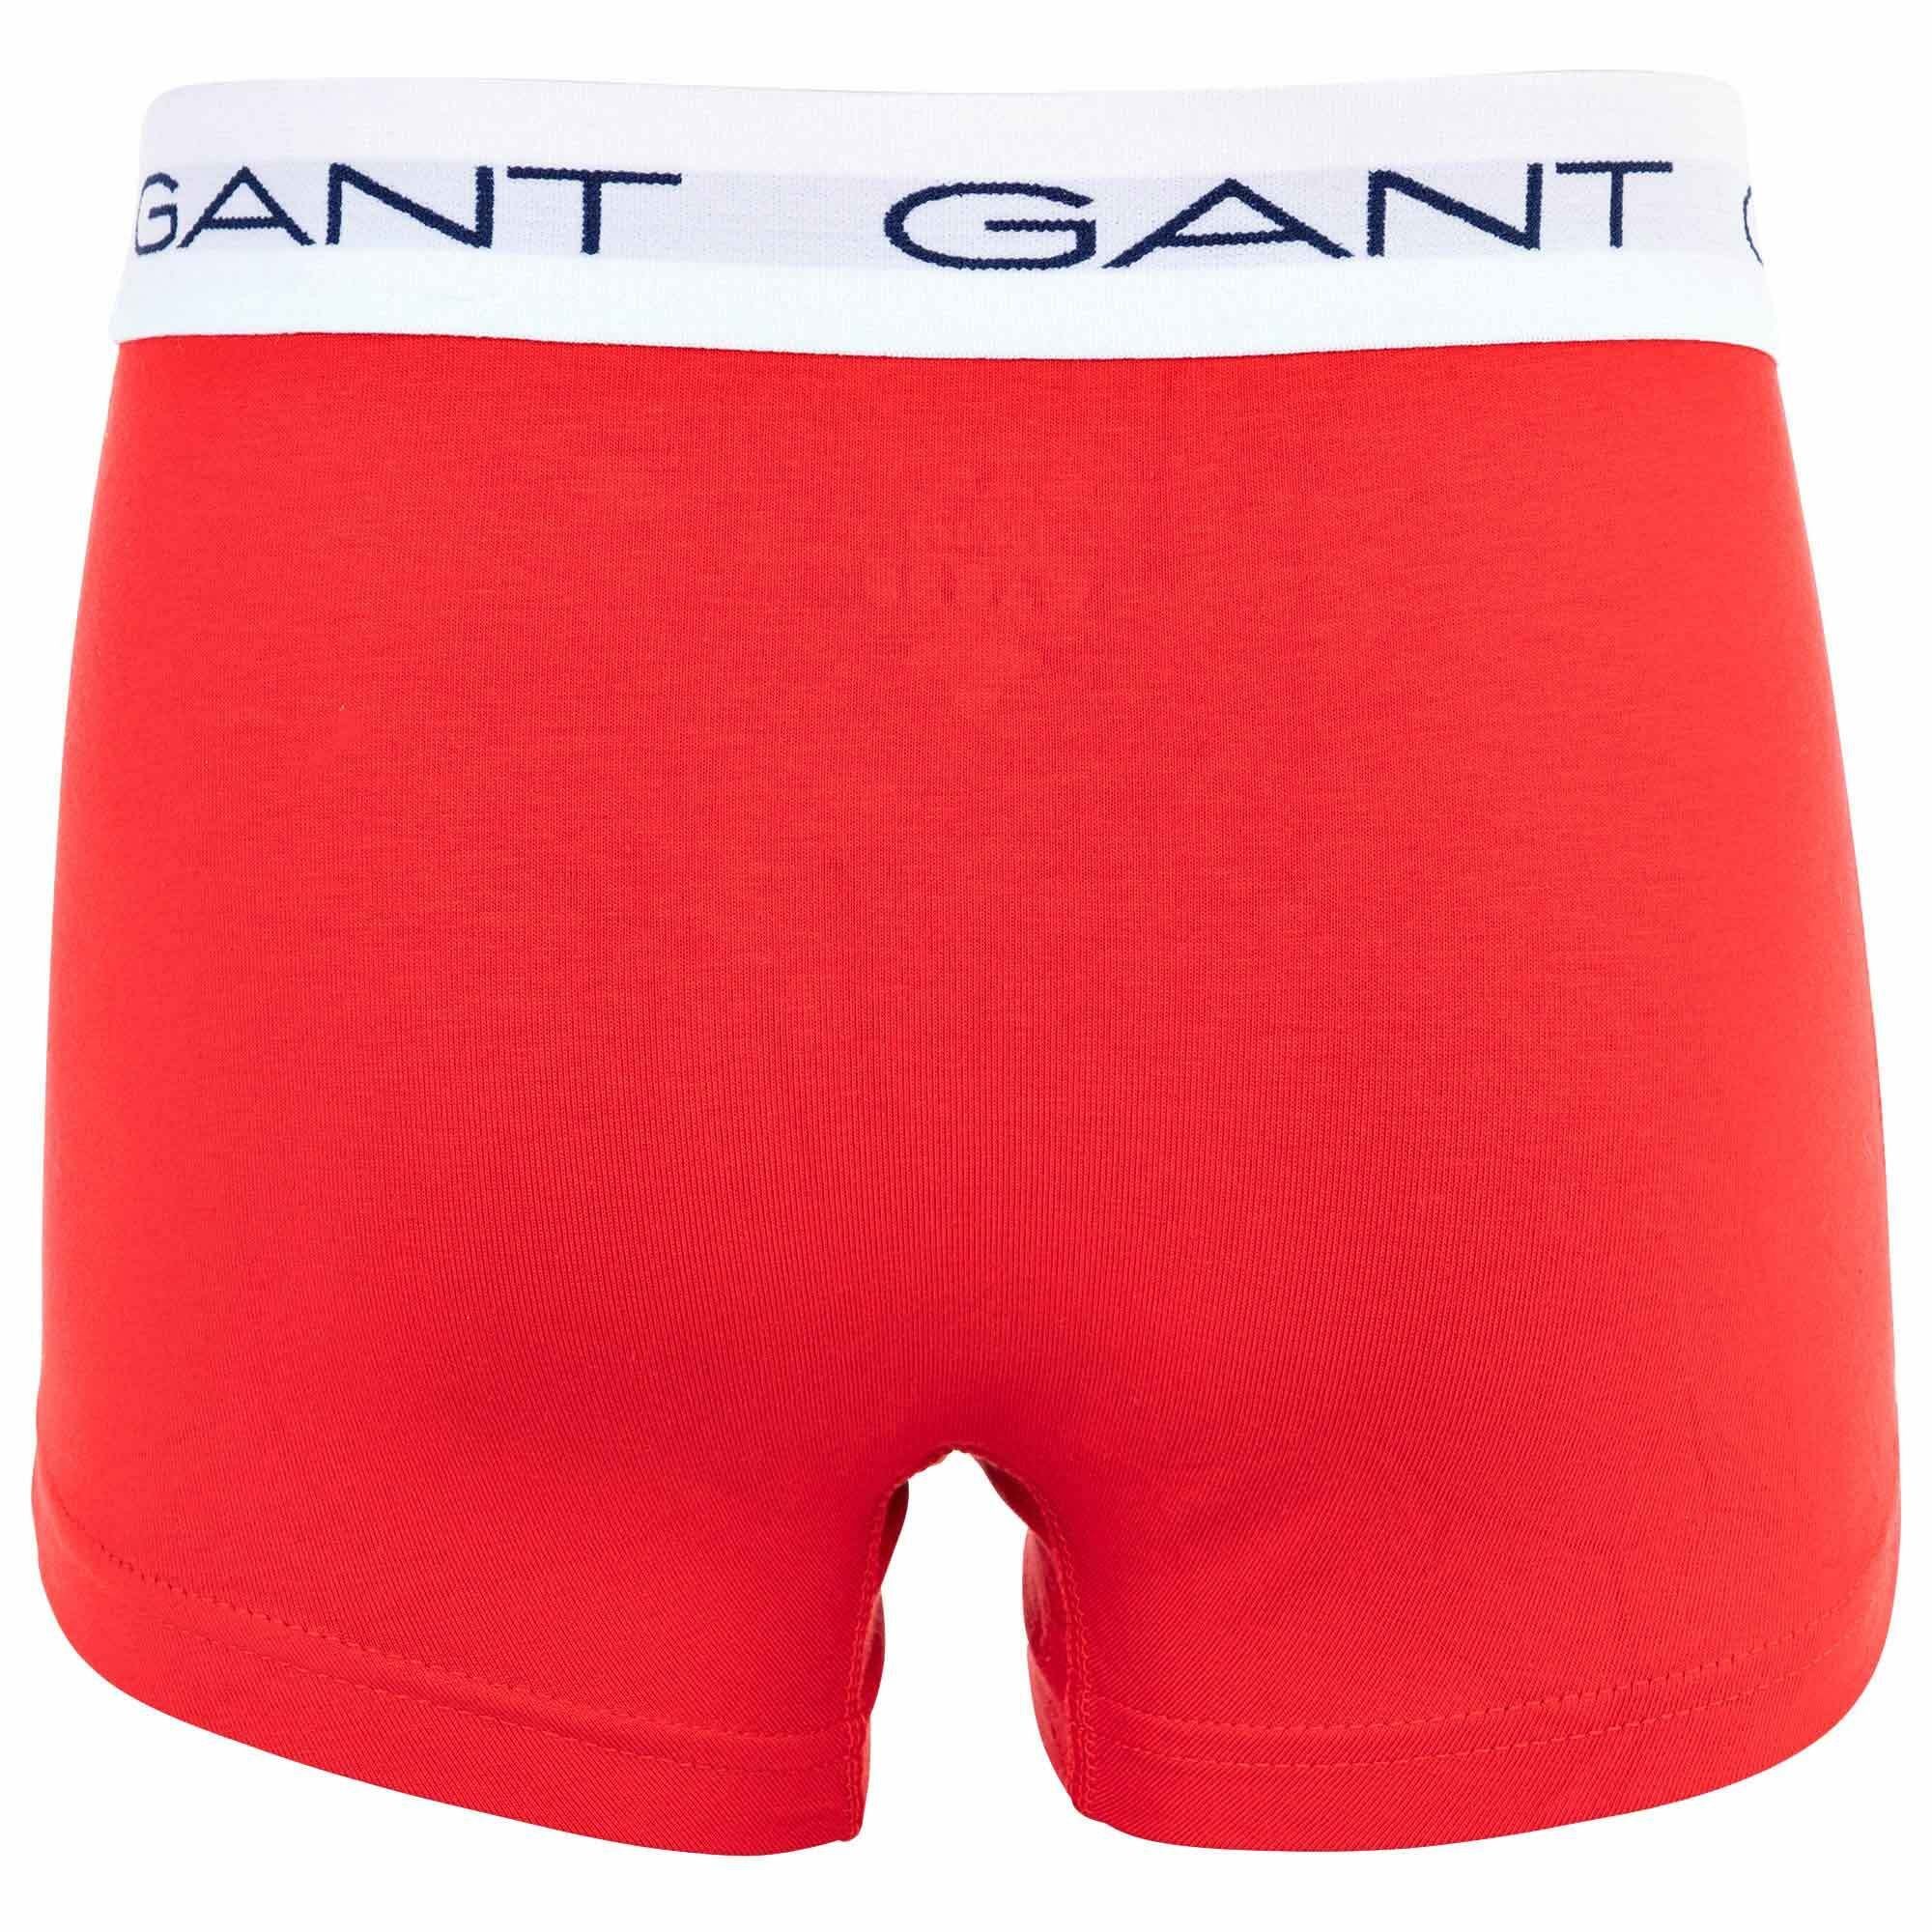 Gant Boxer Jungen Pack 3er Mehrfarbig Boxershorts, Trunks, Cotton 